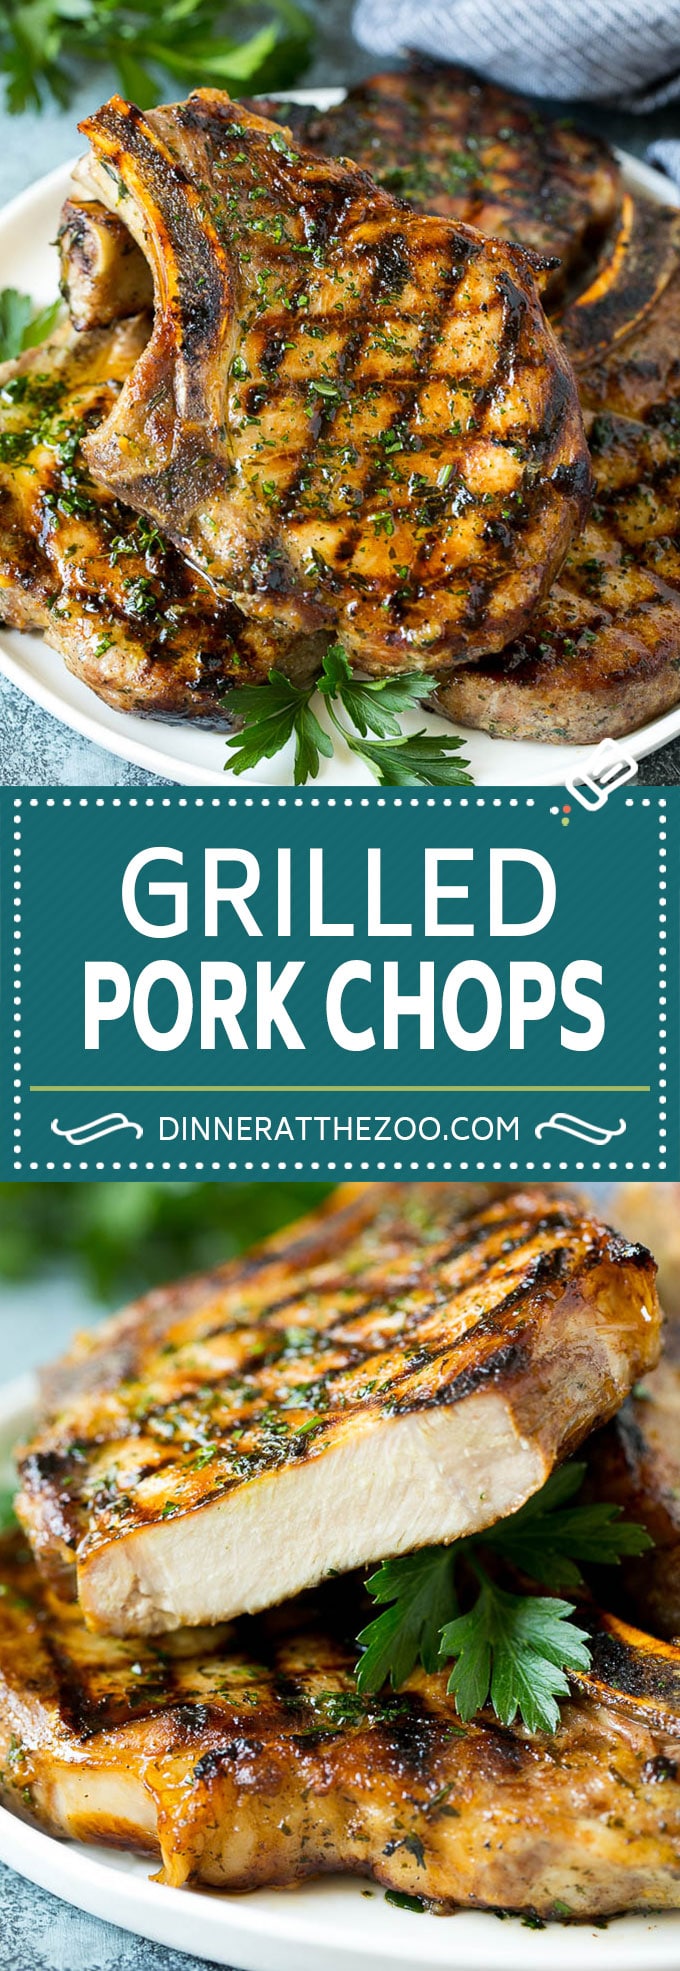 Grilled Pork Chops | Pork Chop Marinade #porkchops #grilling #pork #marinade #dinner #dinneratthezoo